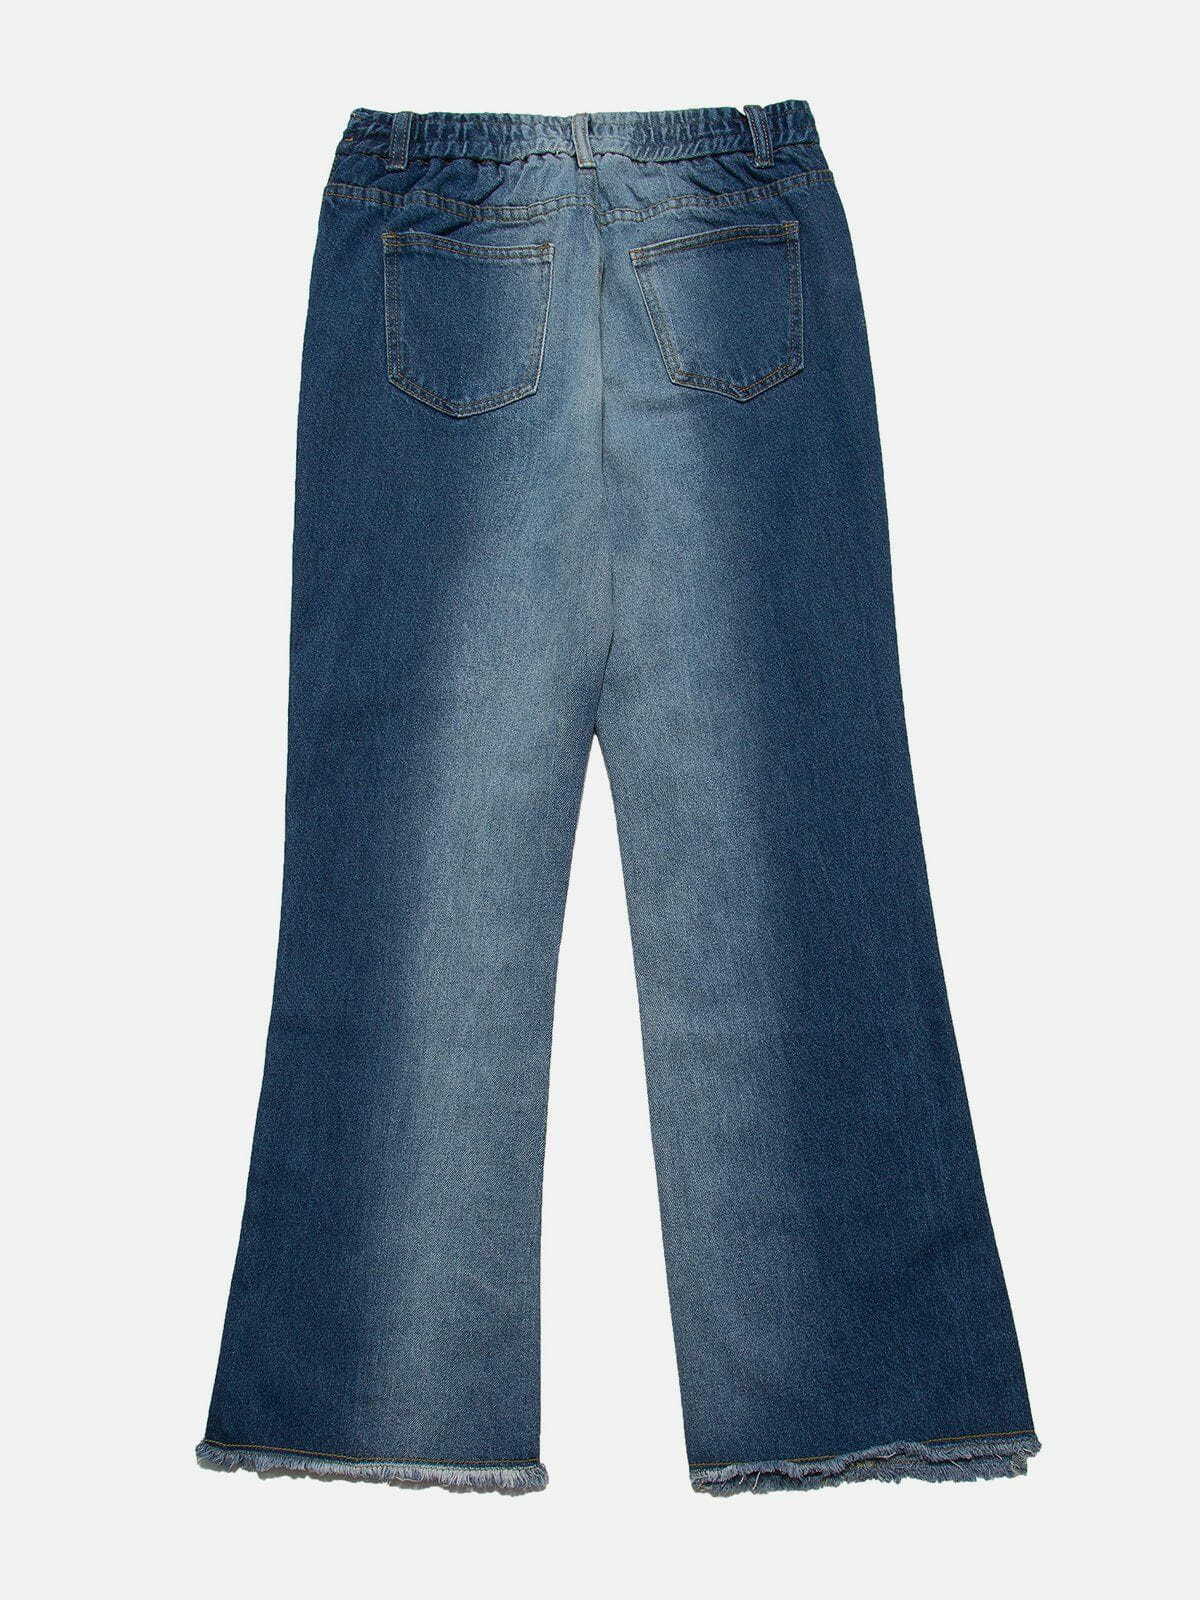 vibrant star graphic jeans edgy gradient design 7728